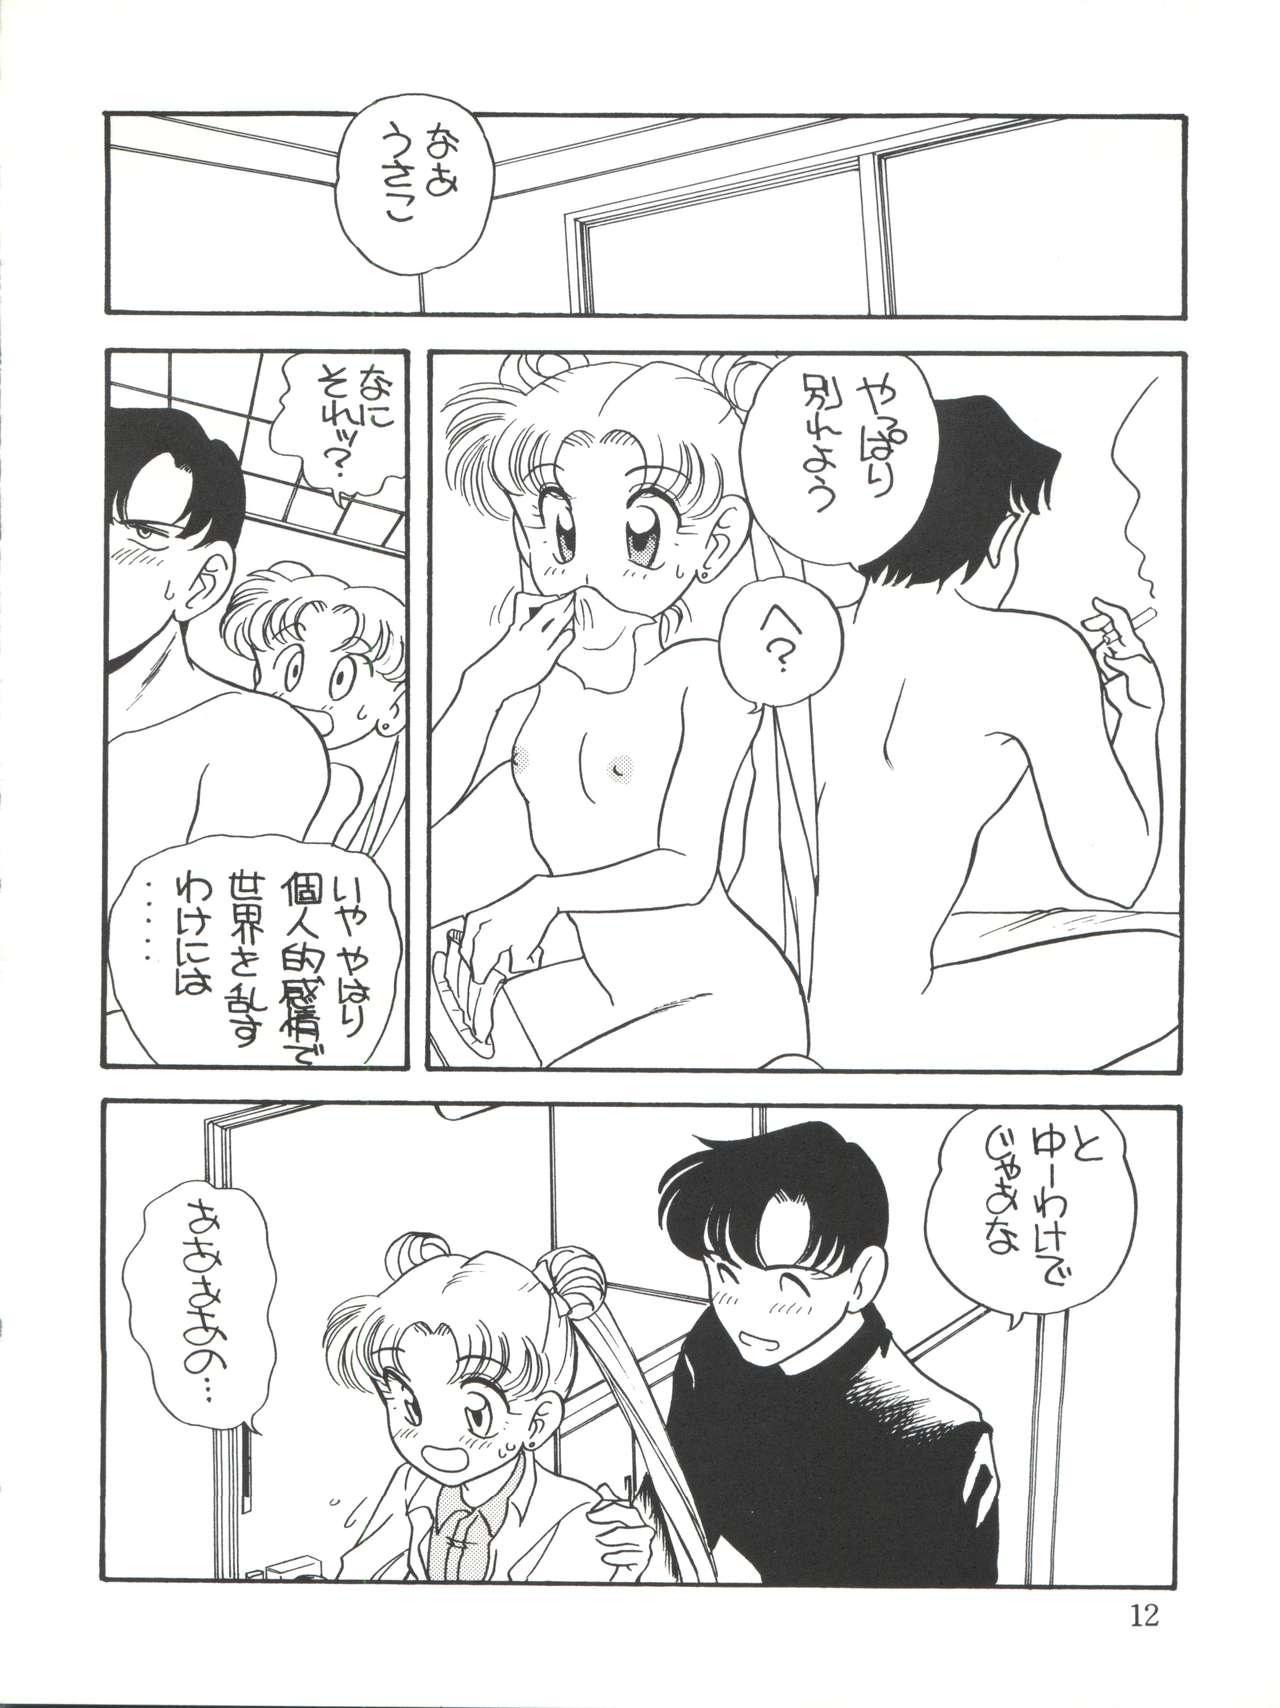 Shoplifter Elfin 9 - Sailor moon Petite Teen - Page 12